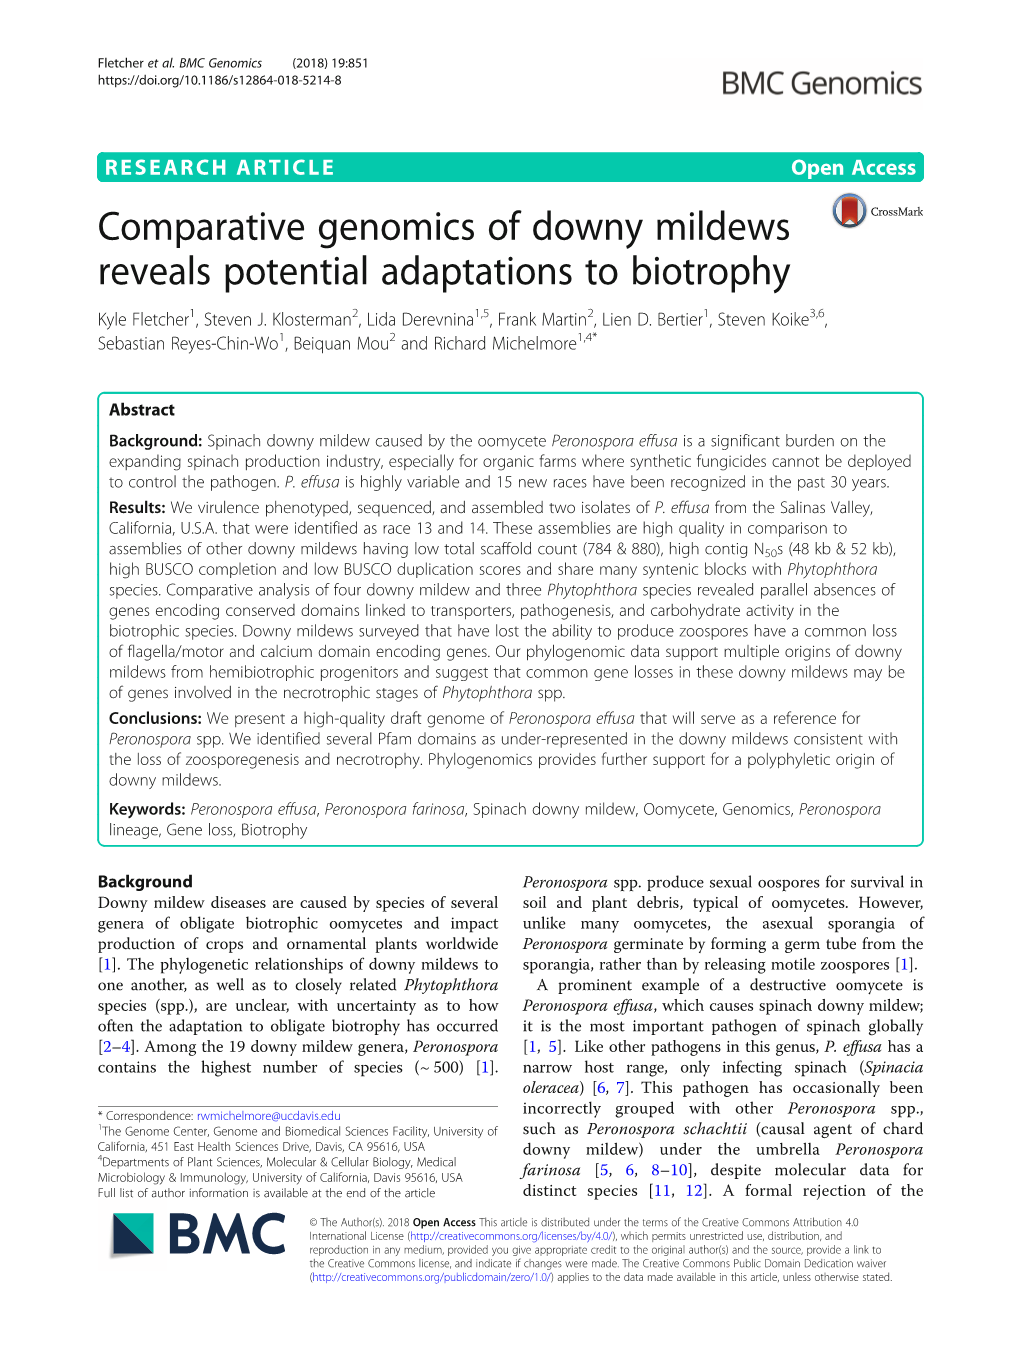 Comparative Genomics of Downy Mildews Reveals Potential Adaptations to Biotrophy Kyle Fletcher1, Steven J